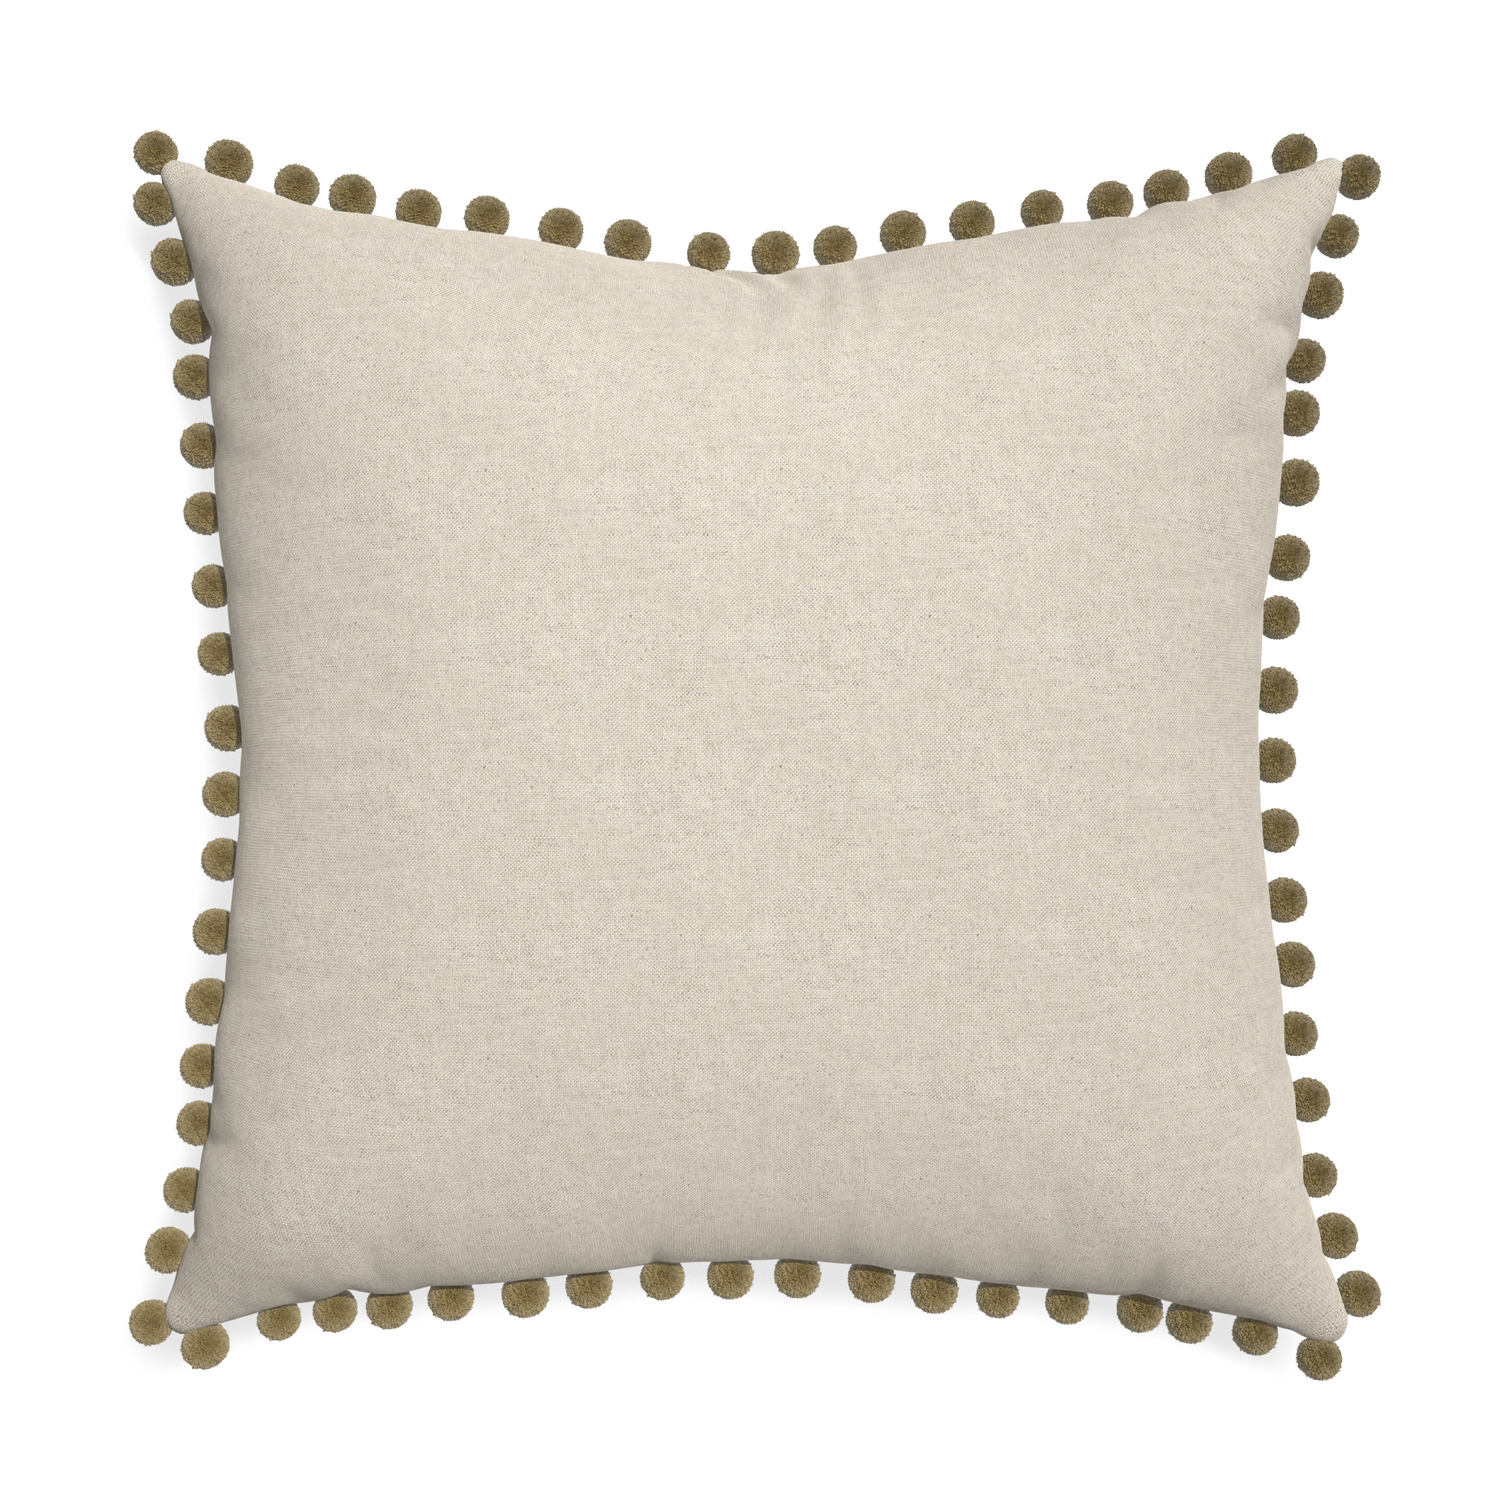 Euro-sham oat custom pillow with olive pom pom on white background